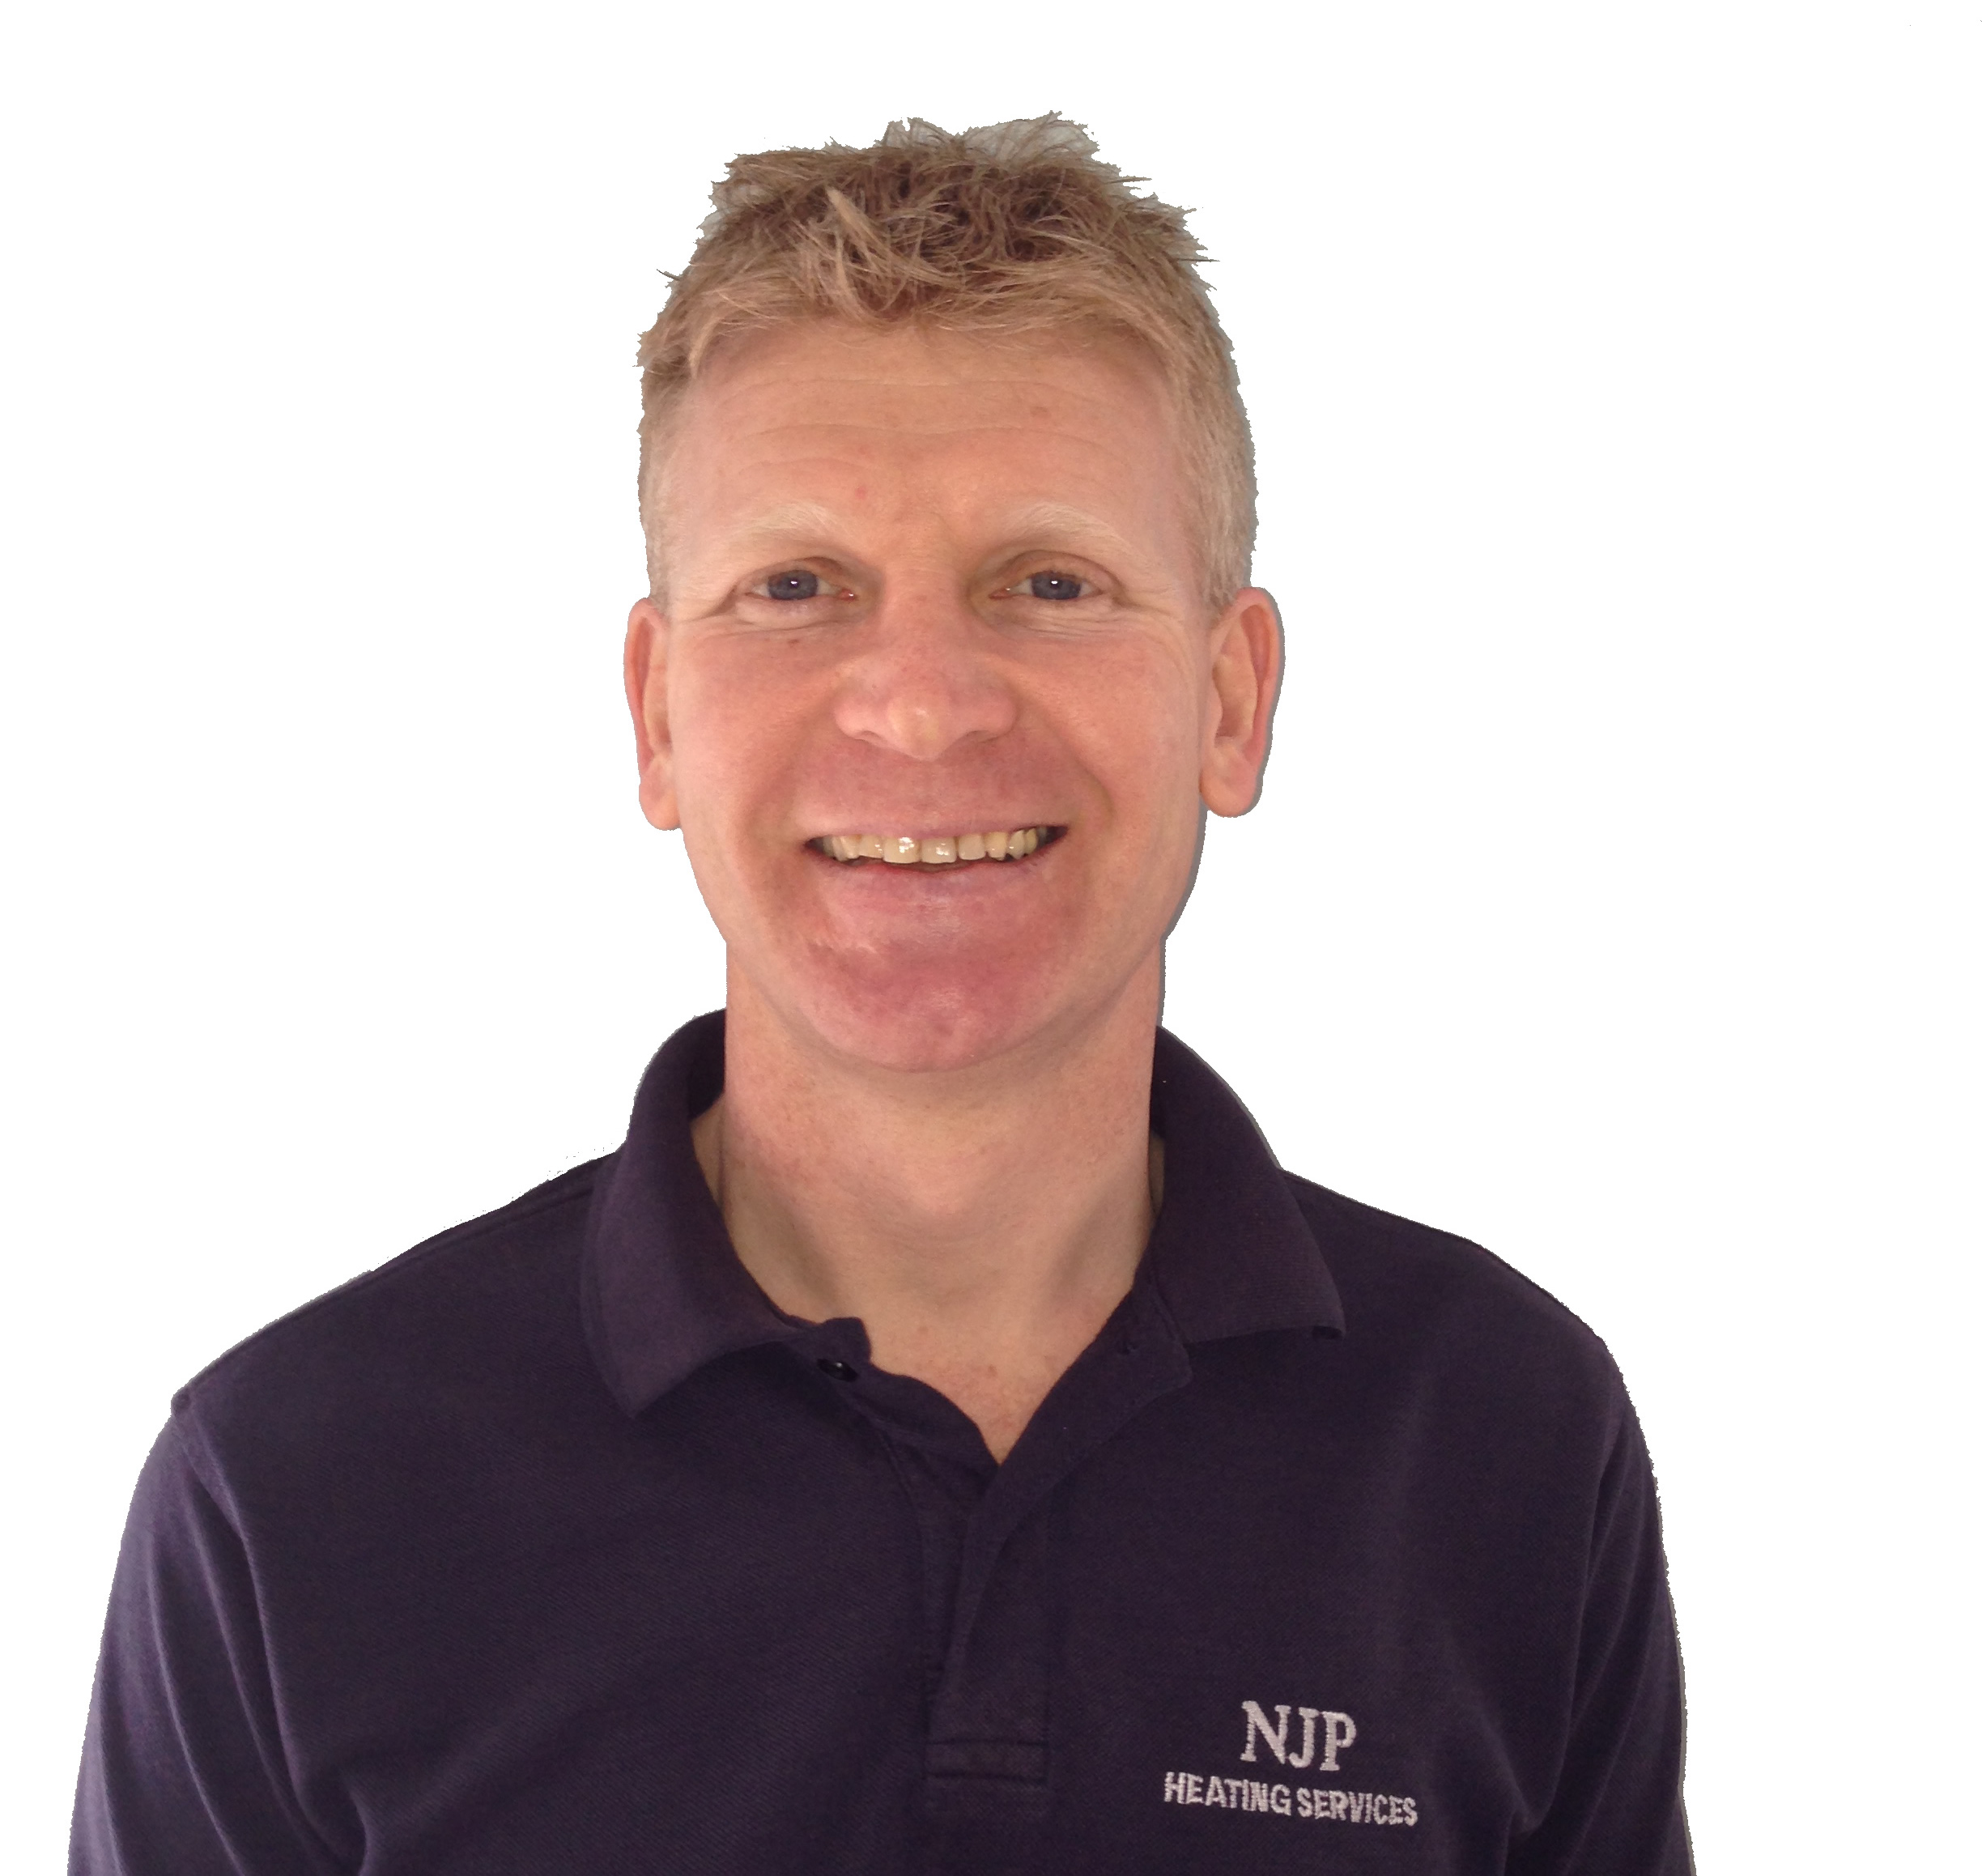 Nick Prickett, Director, NJP Heating Services Ltd